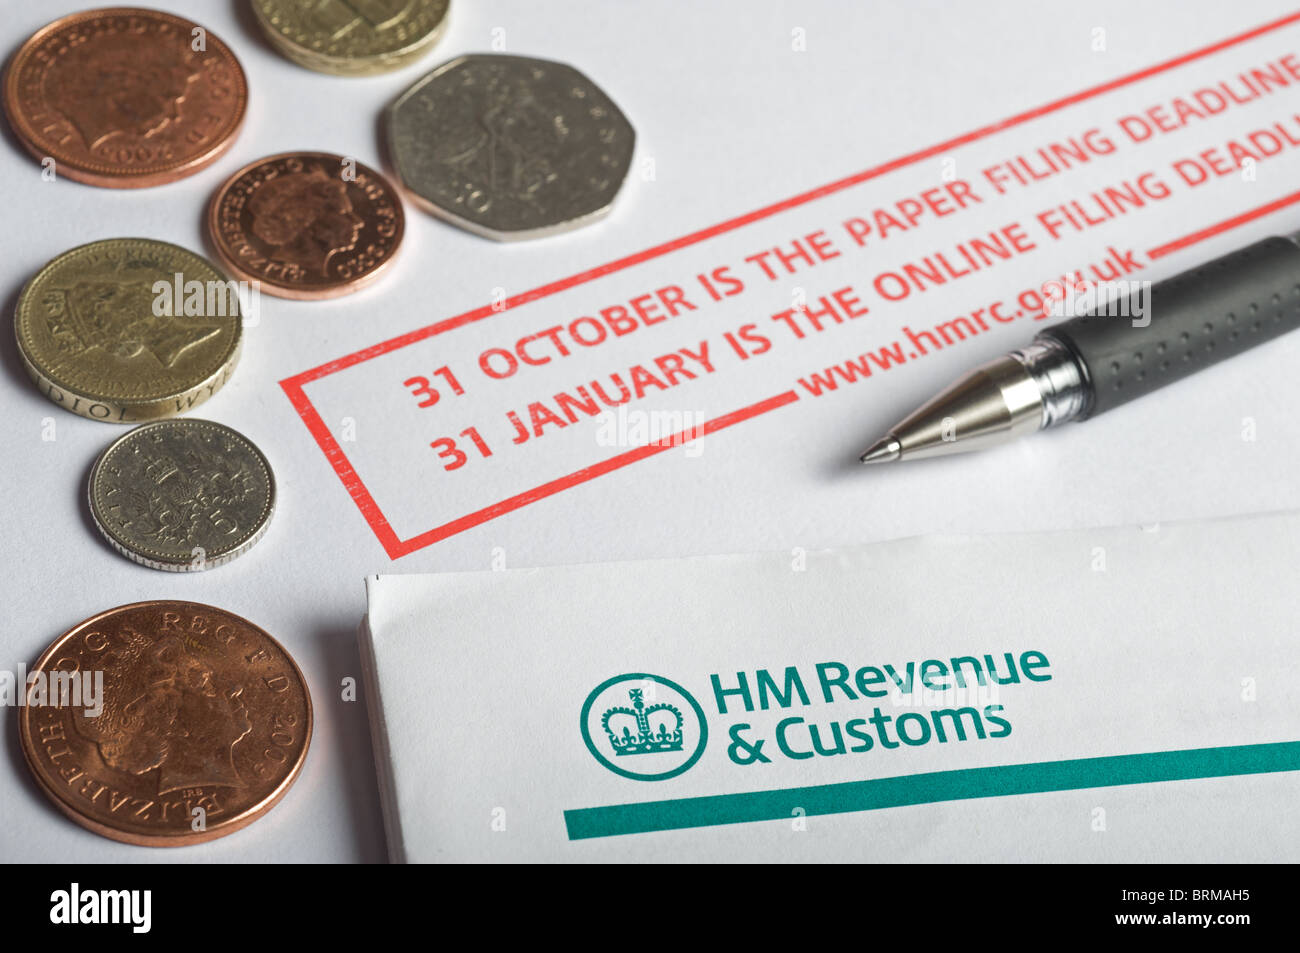 hm-revenue-customs-tax-form-stock-photo-alamy